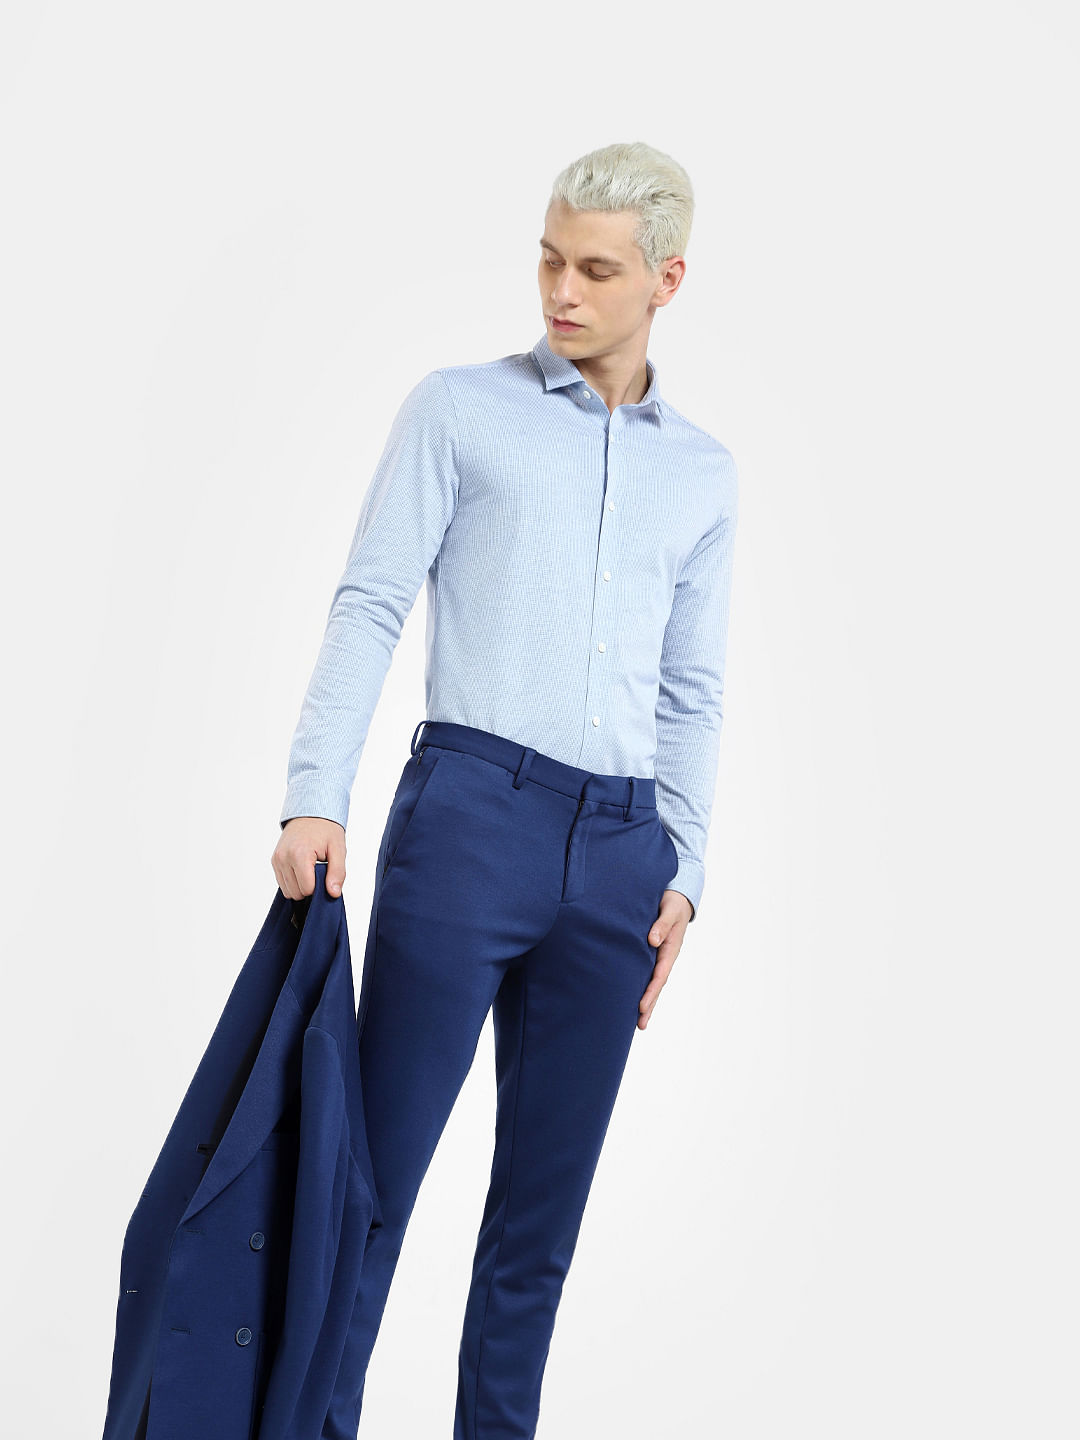 Man Blue Pants White Shirt Tie Stock Photo 765367042  Shutterstock